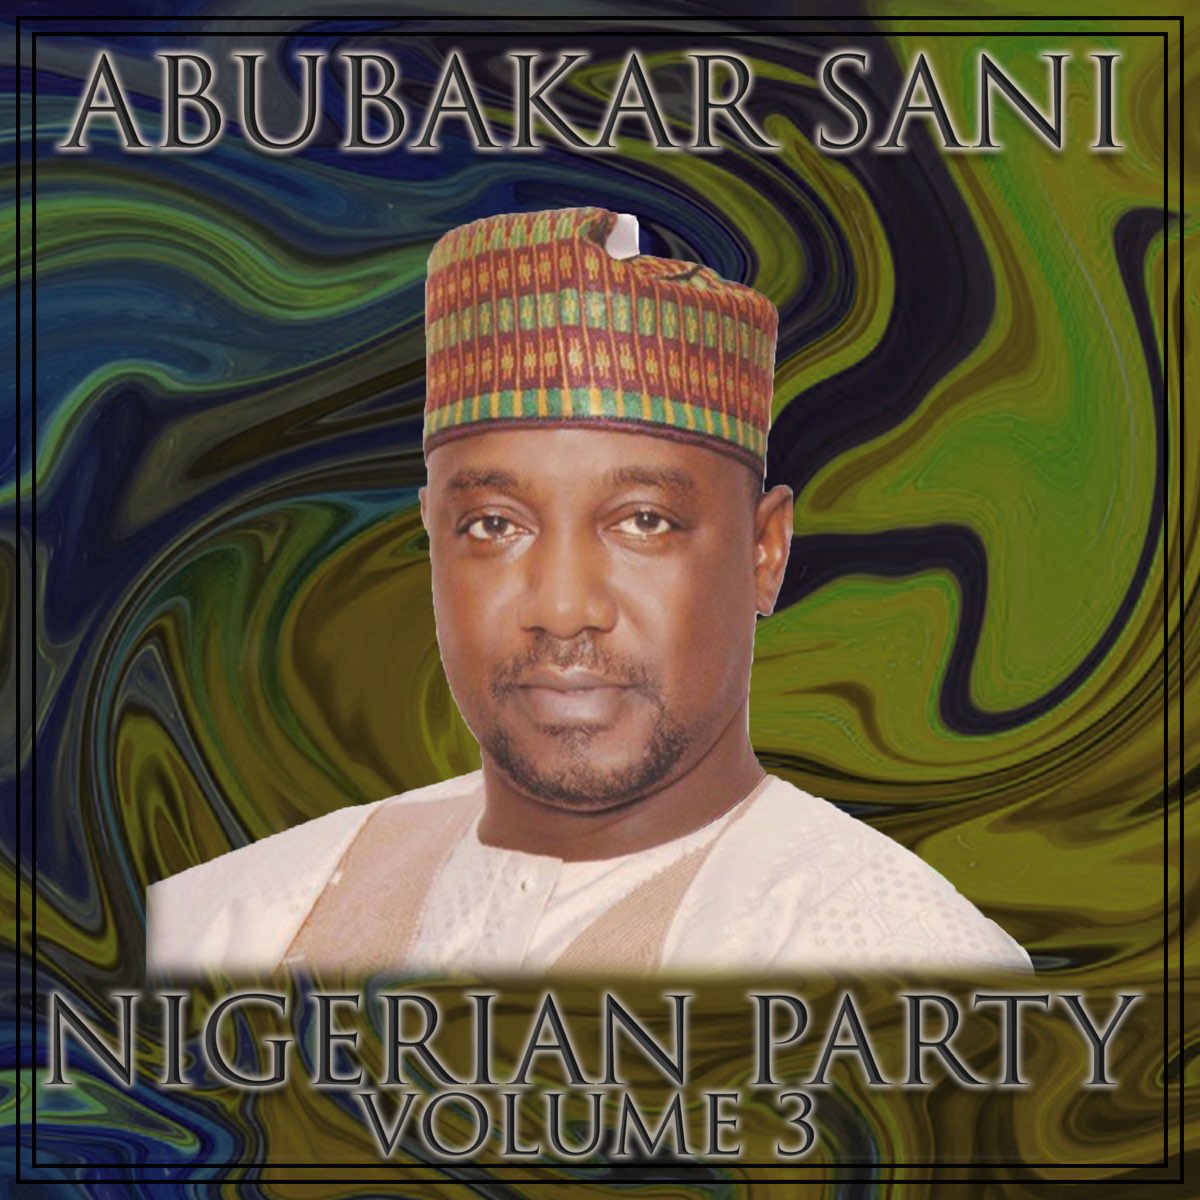 Nigerian Party, Vol. 3 by Abubakar Sani on Apple Music